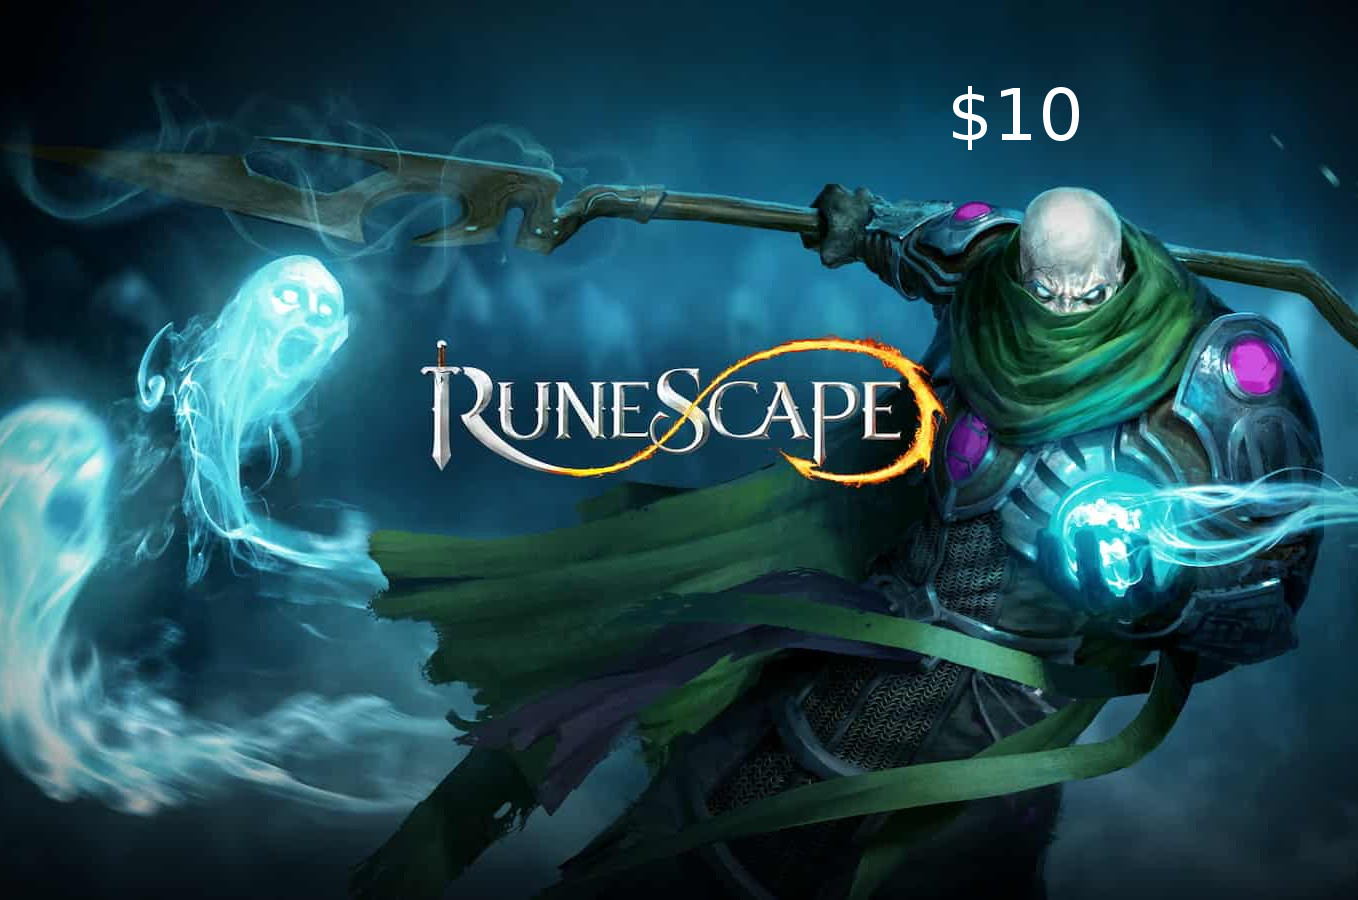 Runescape $10 Prepaid Game Card [USD 10.11]